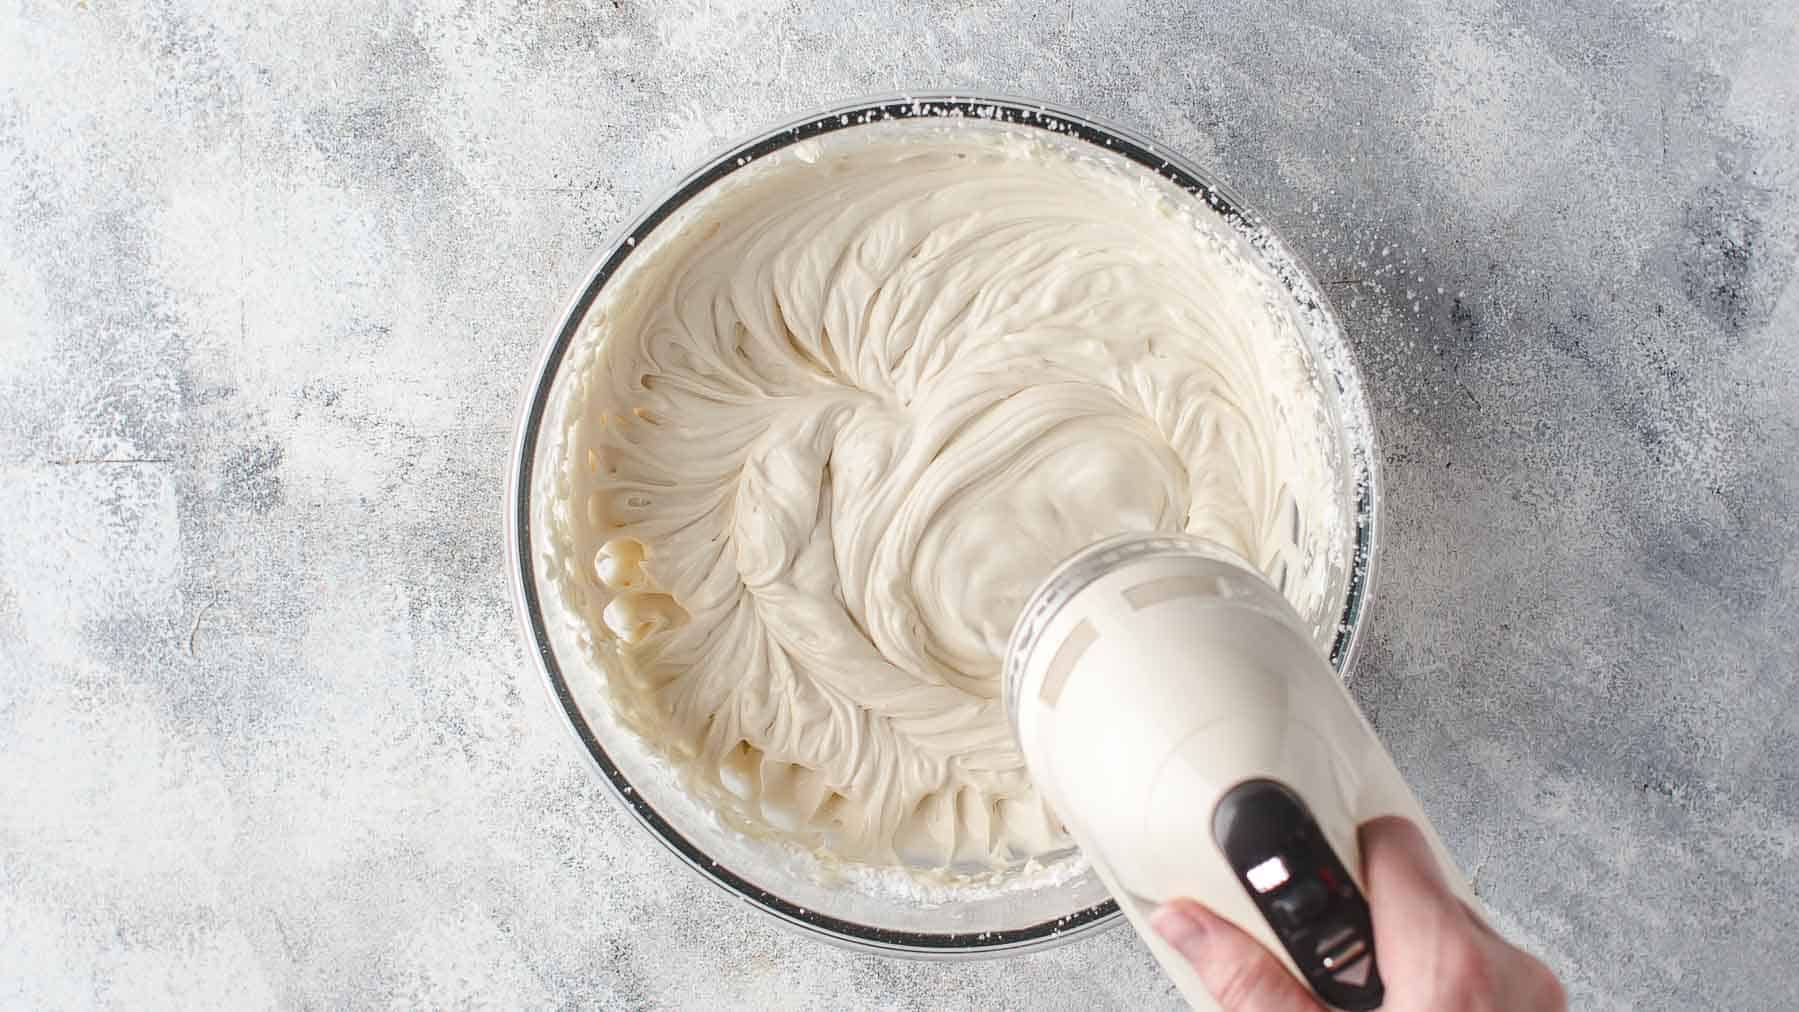 Mixing process of mascarpone cream